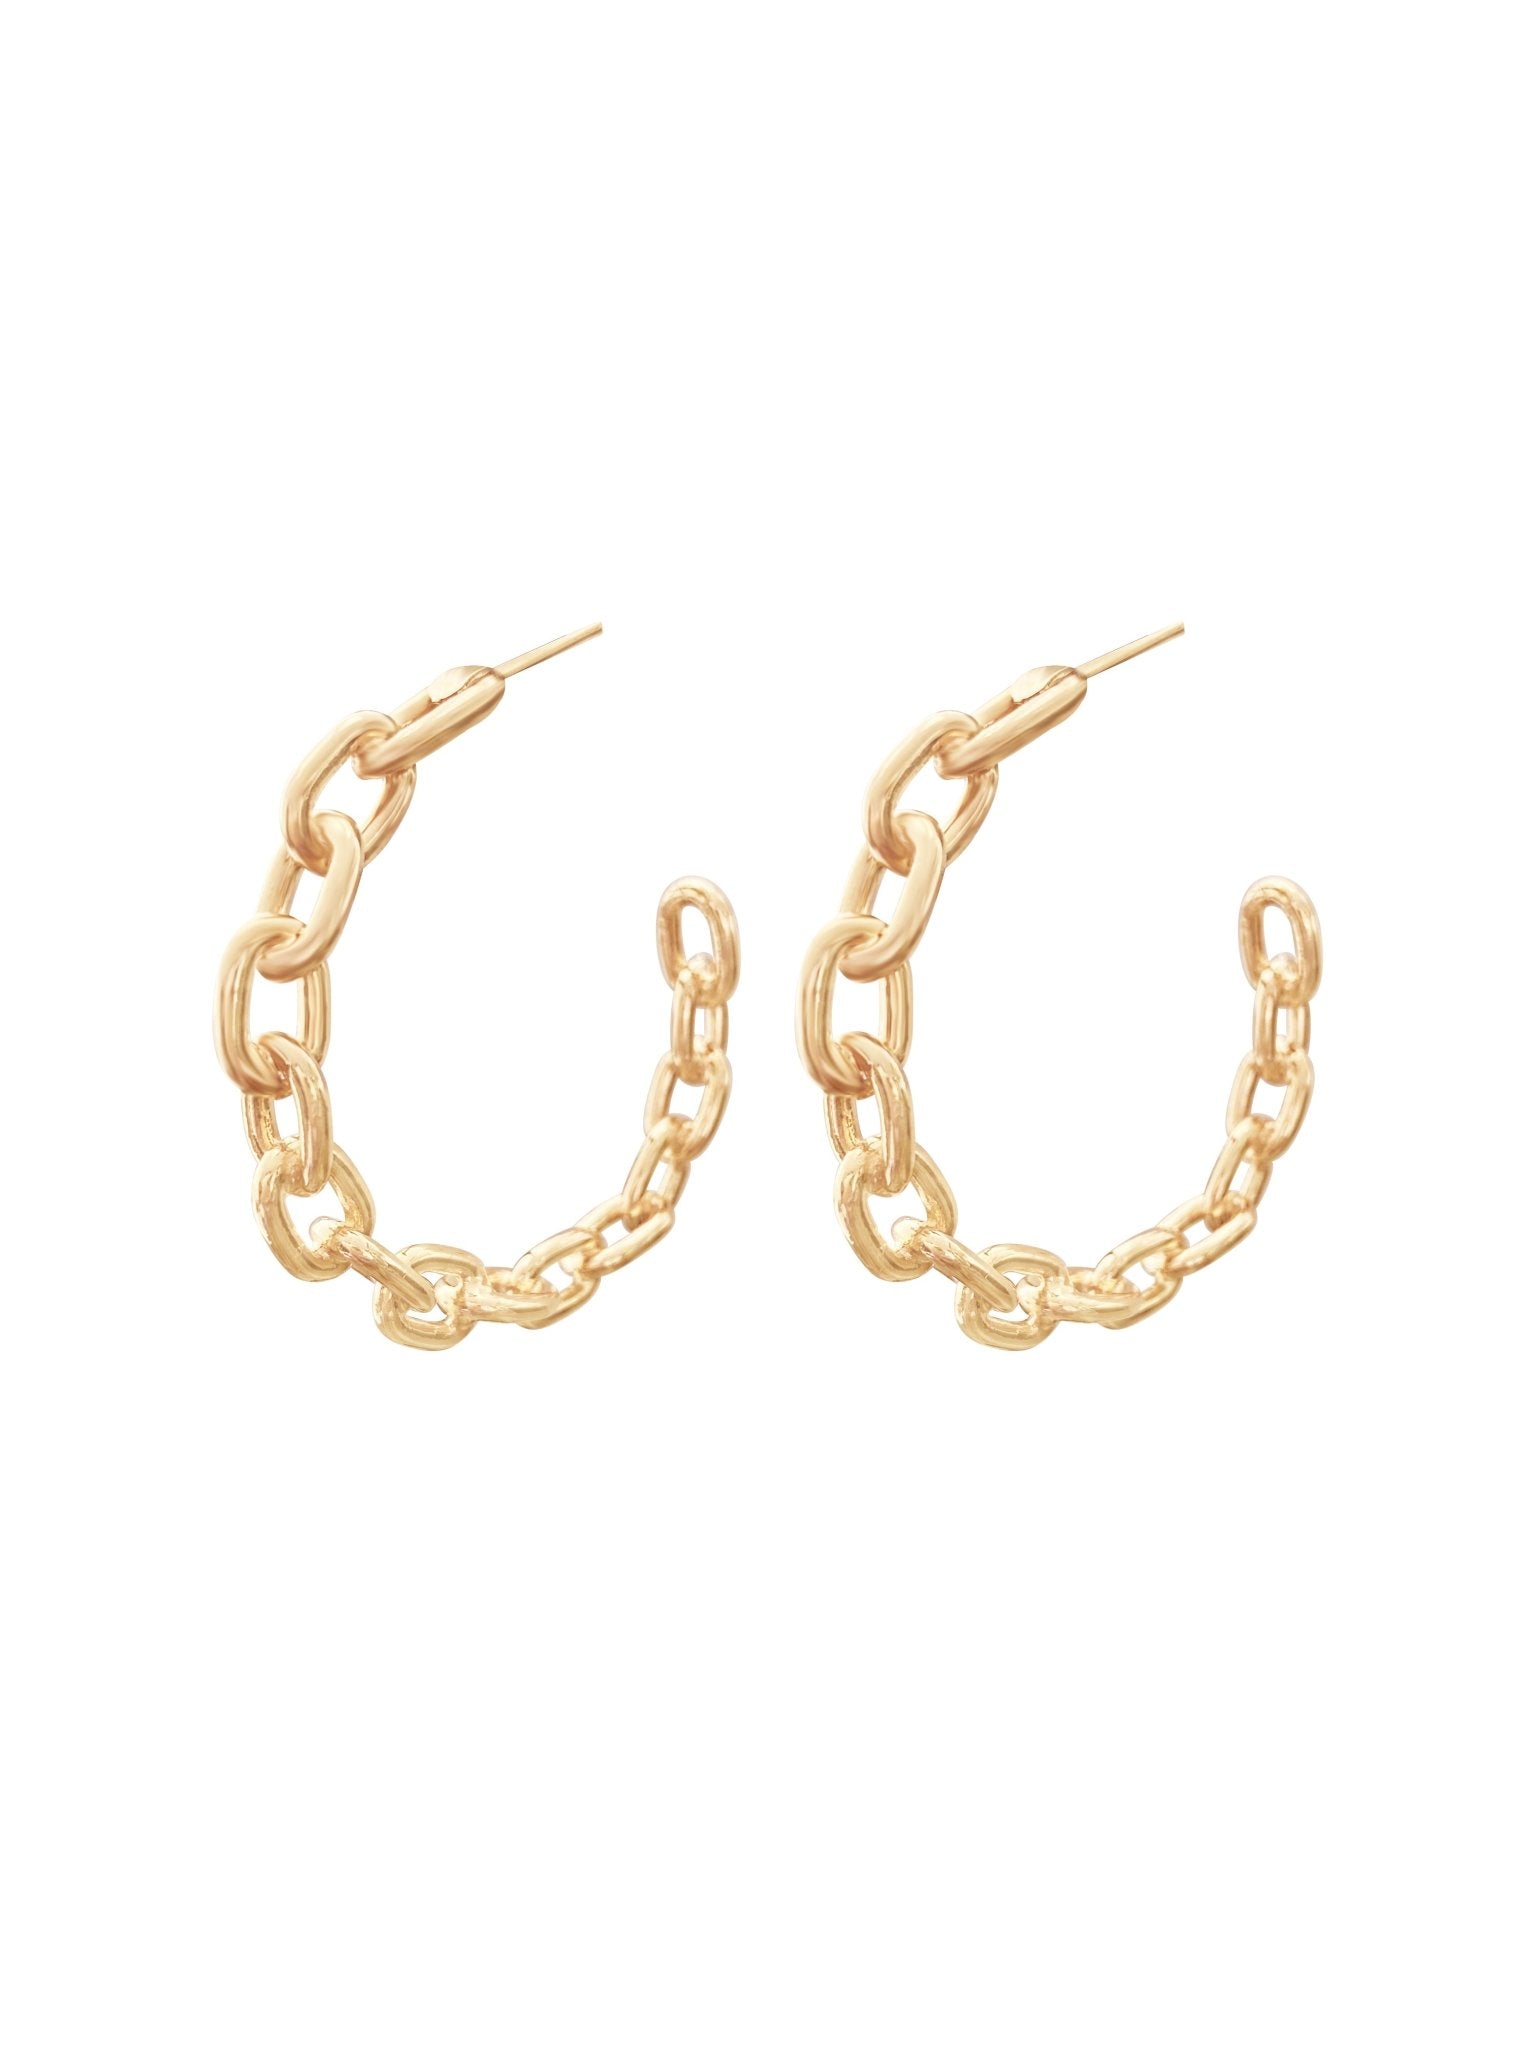 Chained Gold Hoops - NOA - Earrings